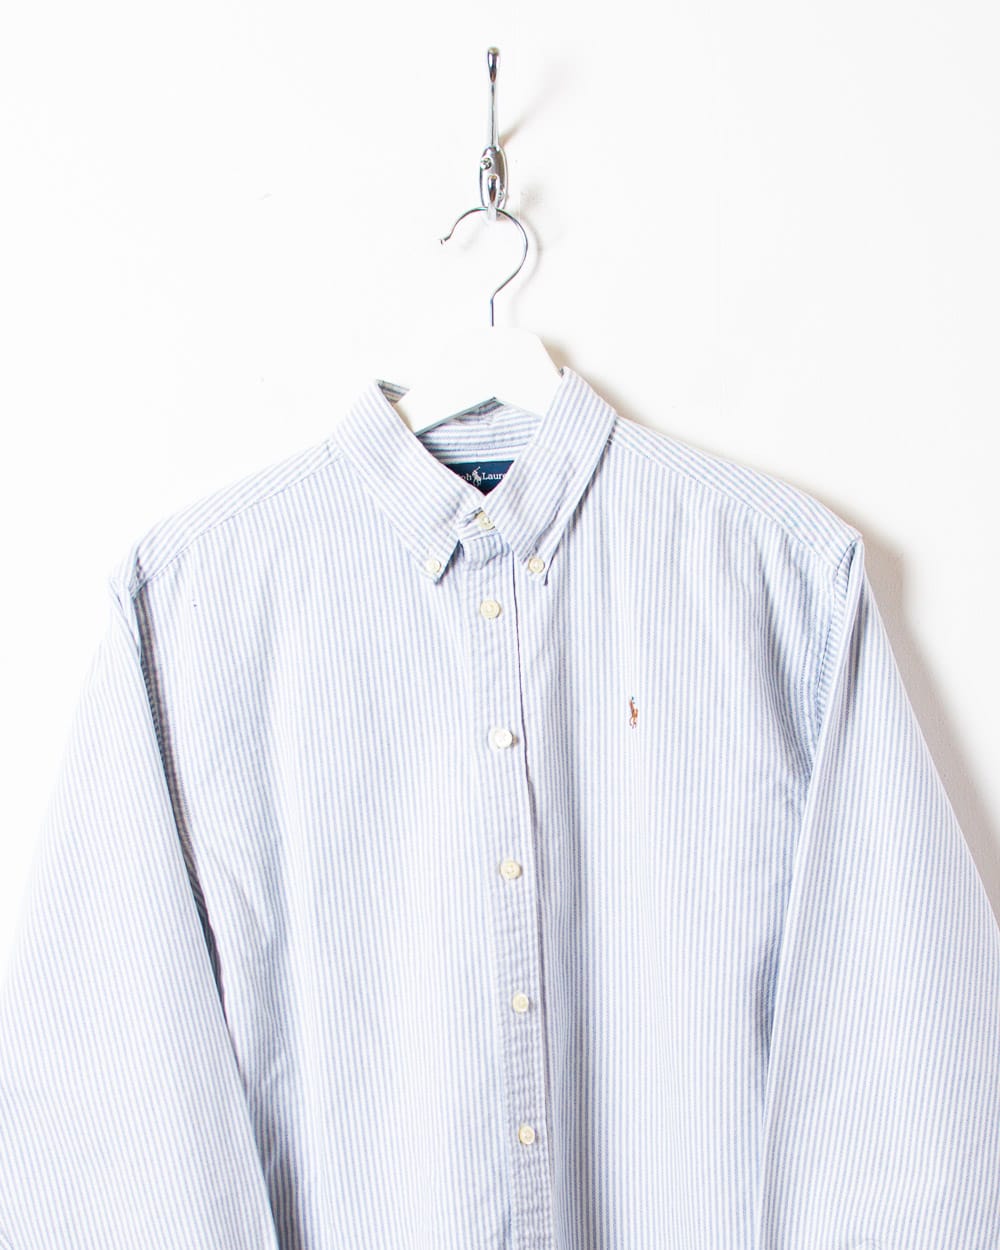 BabyBlue Polo Ralph Lauren Striped Shirt - X-Small